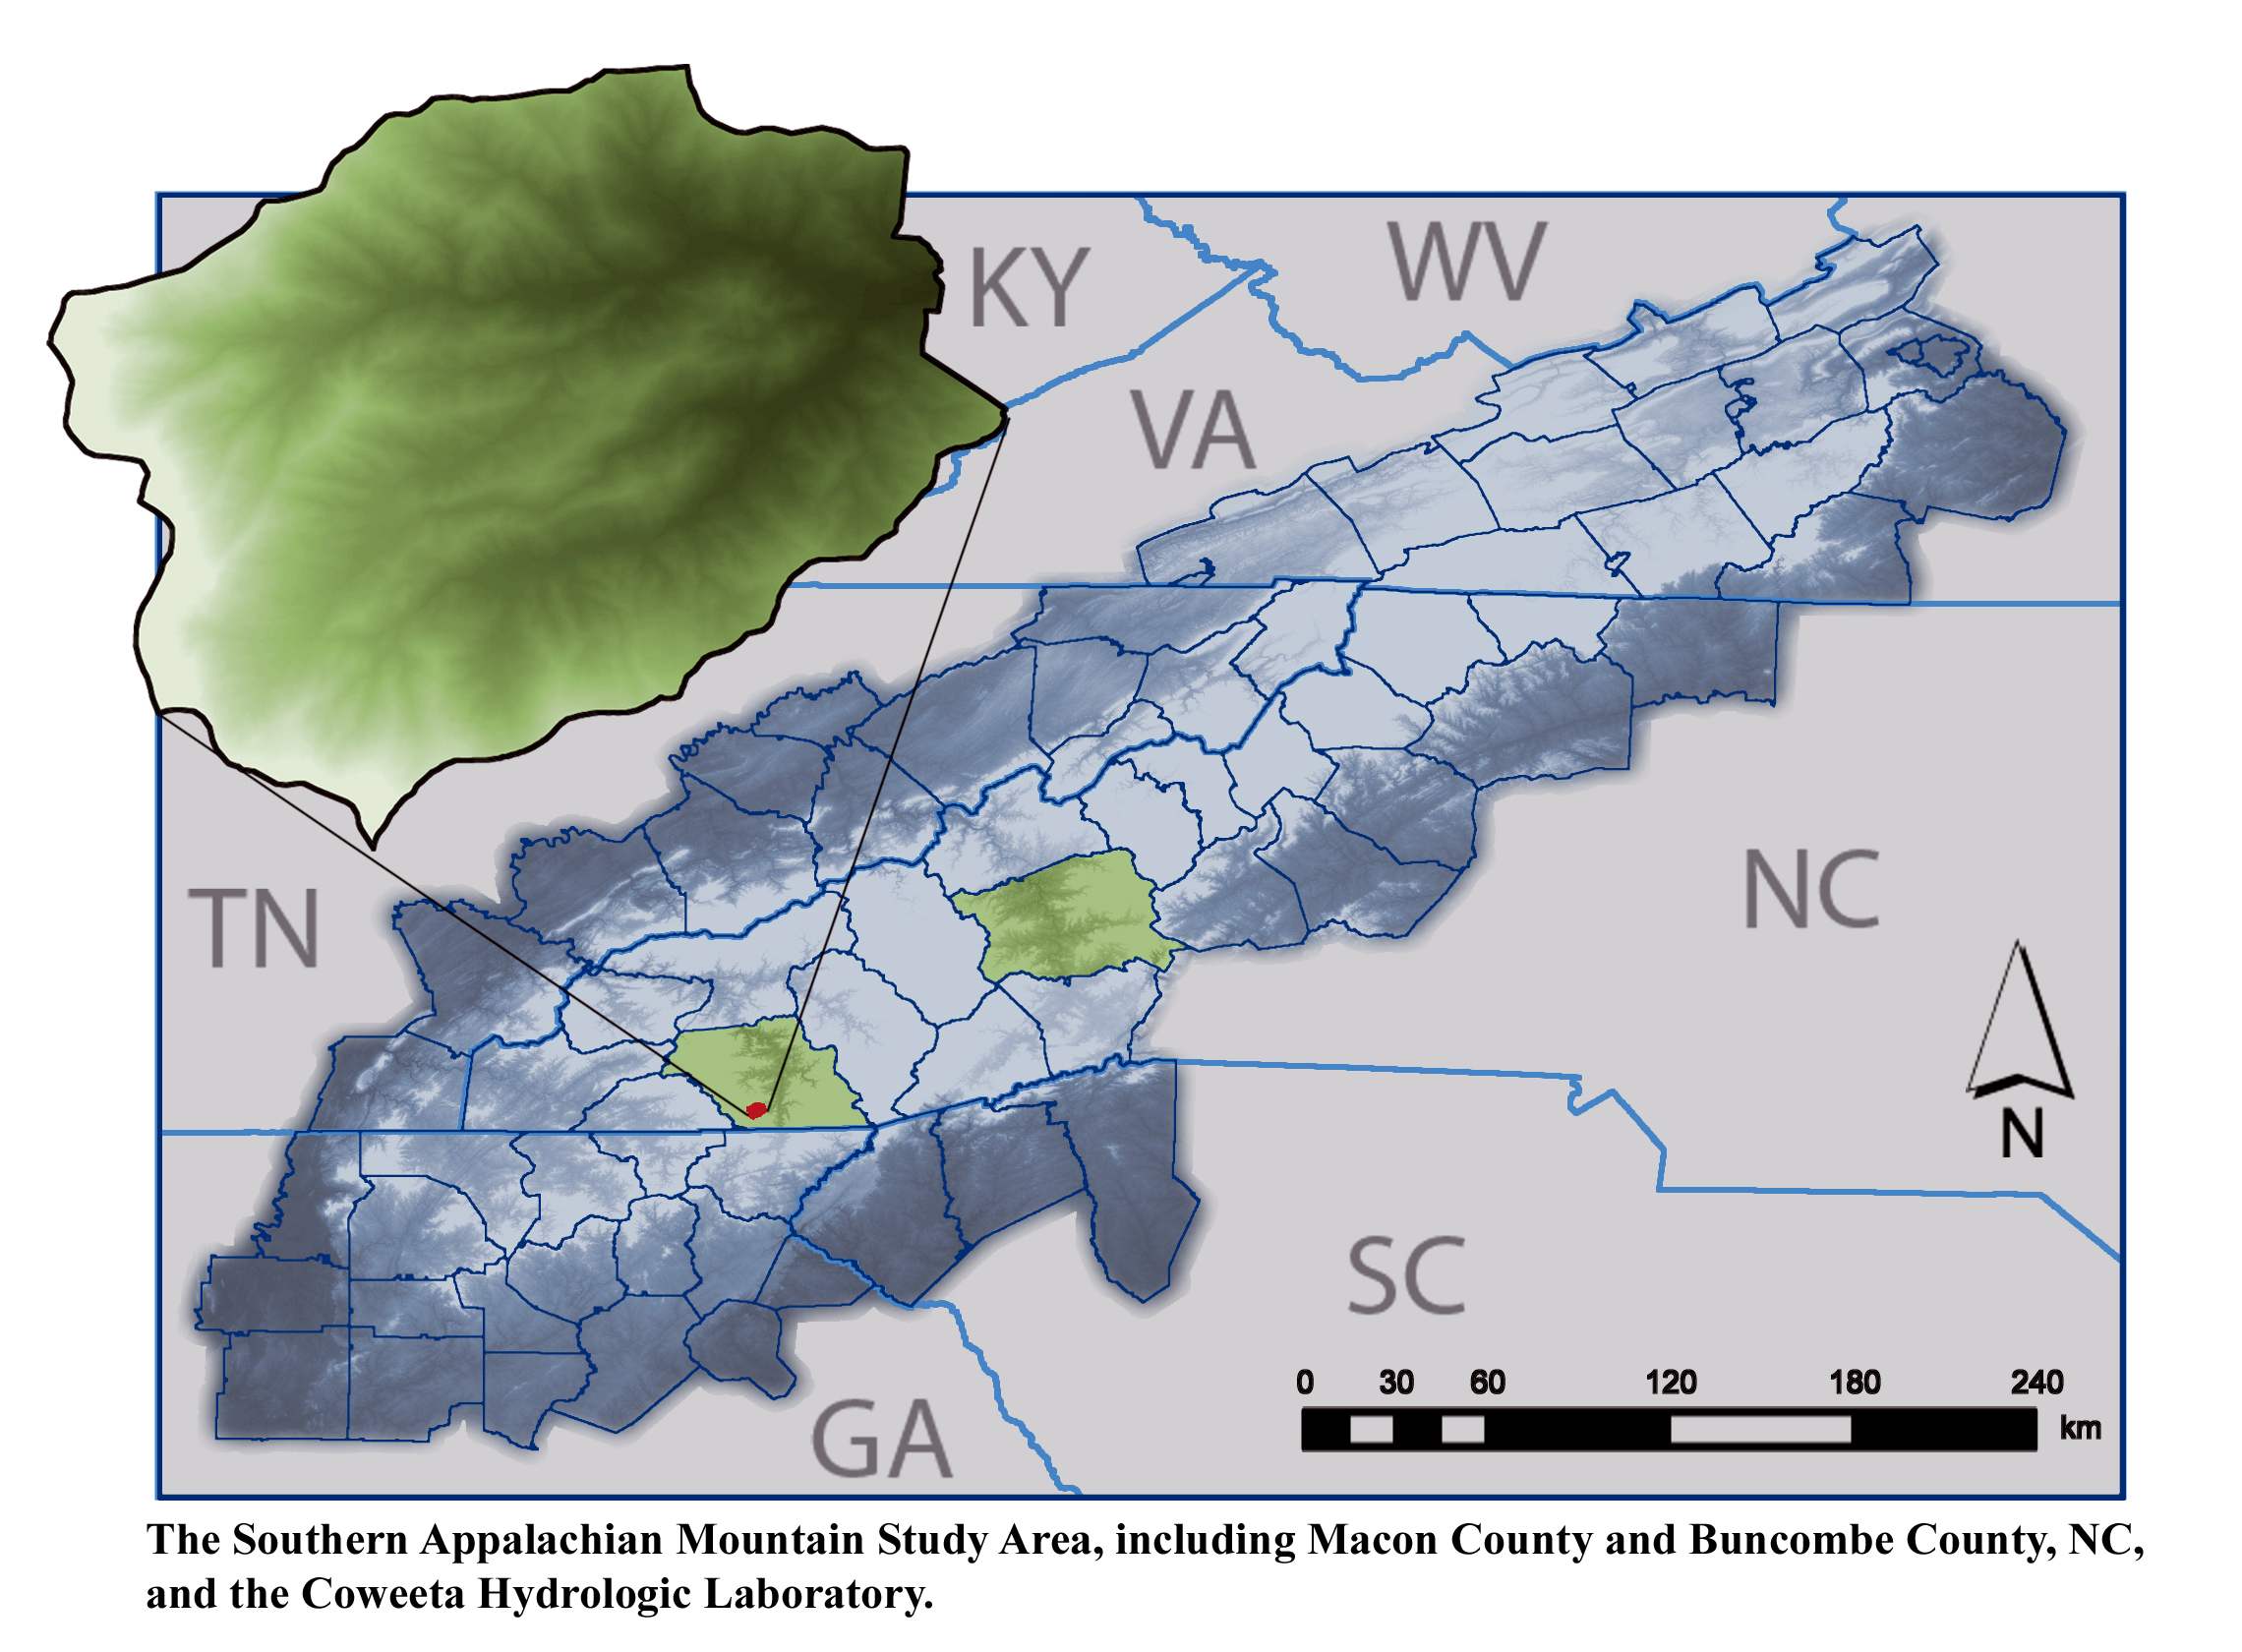 Location of the Coweeta Hydrologic Laboratory and Southern Appalachian Study Area